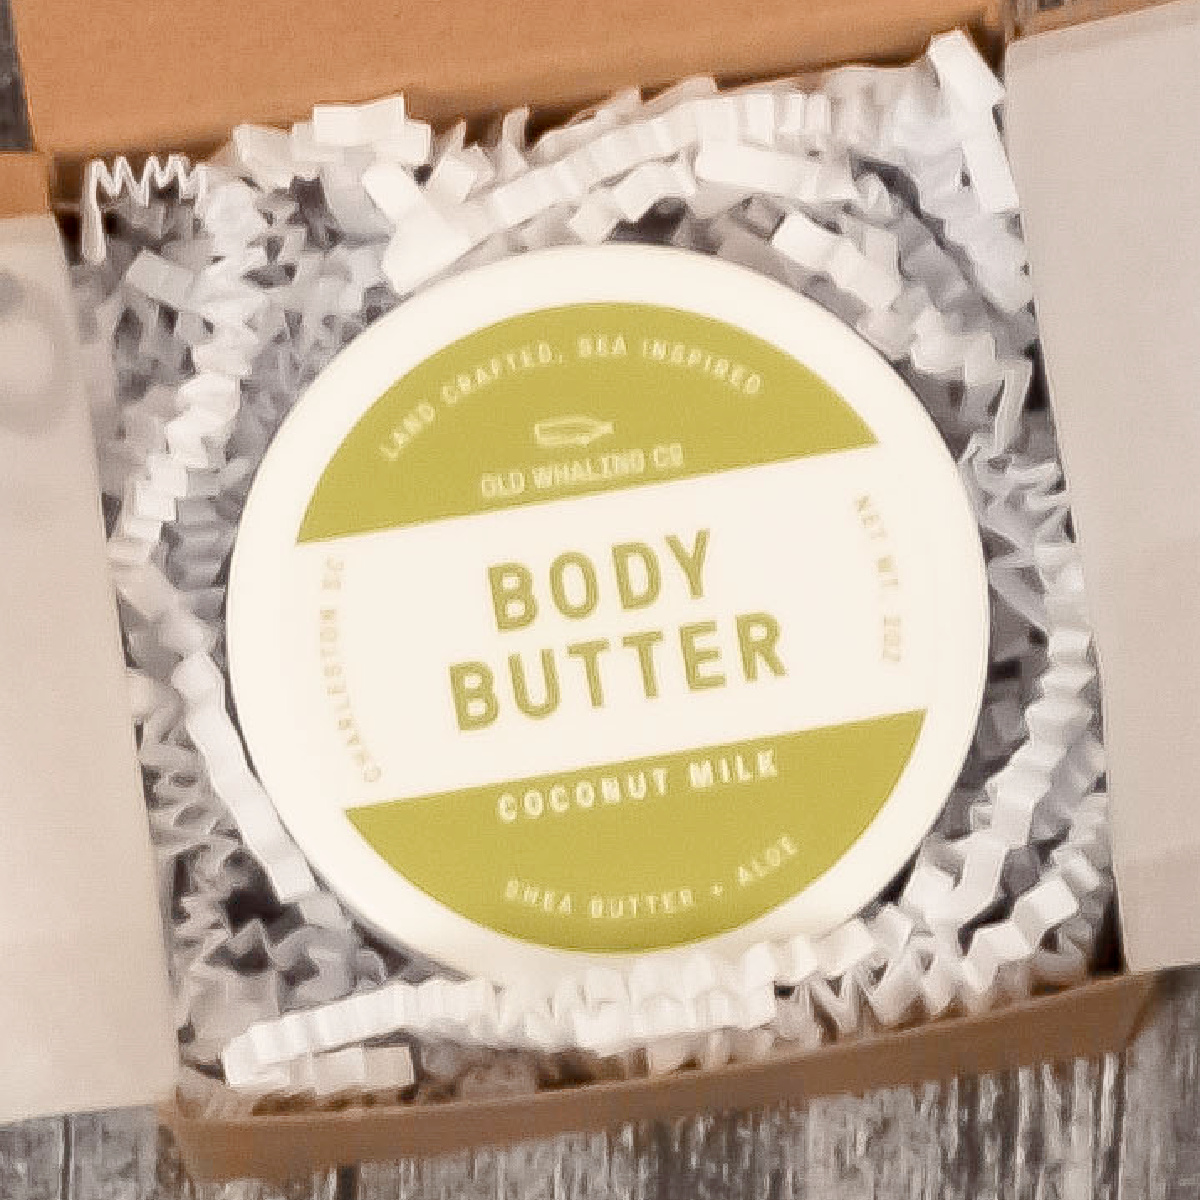 Coconut Milk Body Butter, Packaged